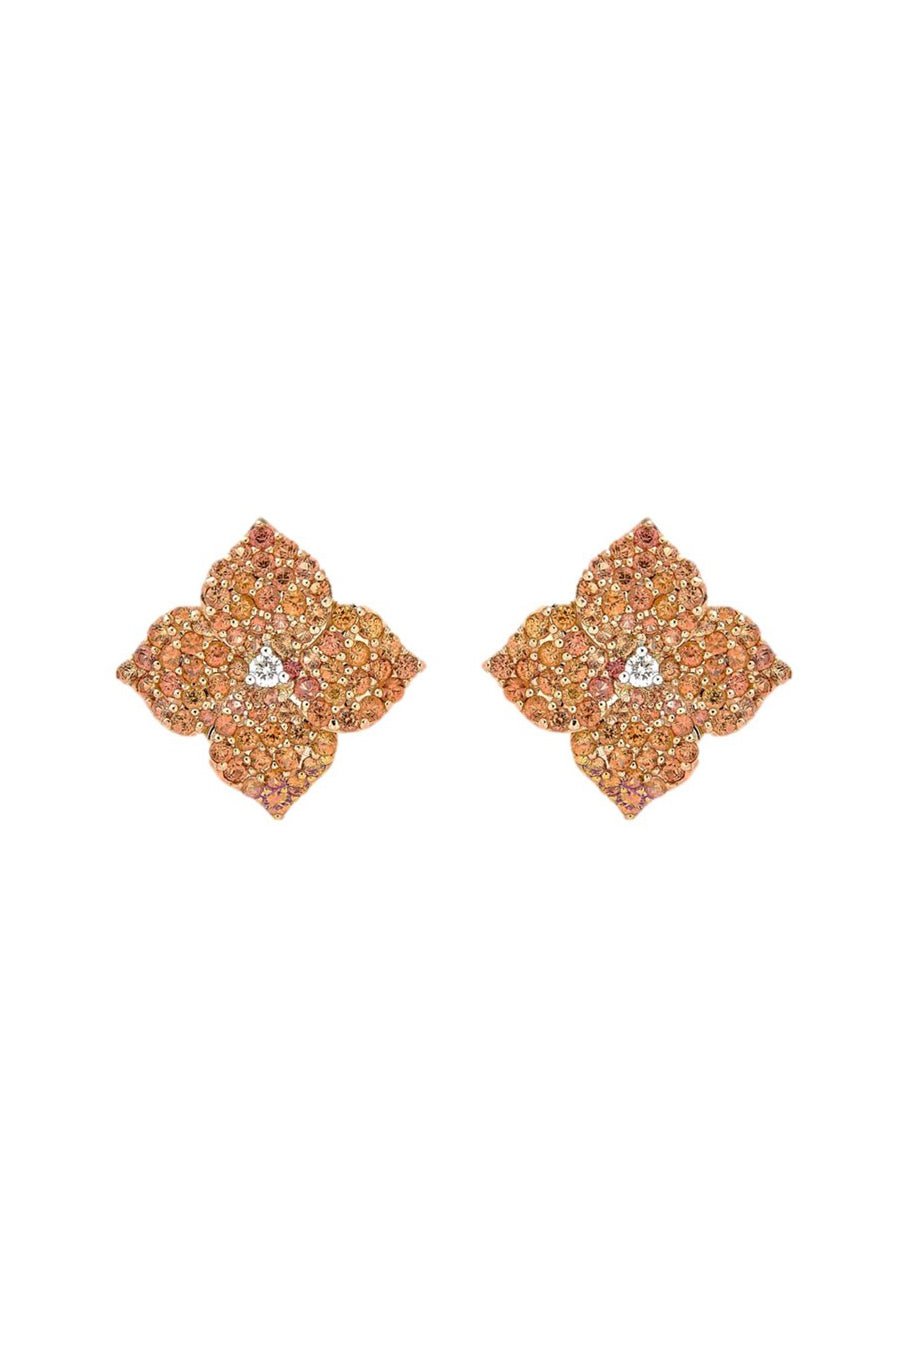 PIRANESI-Orange Sapphire Small Flower Stud Earrings-ROSE GOLD